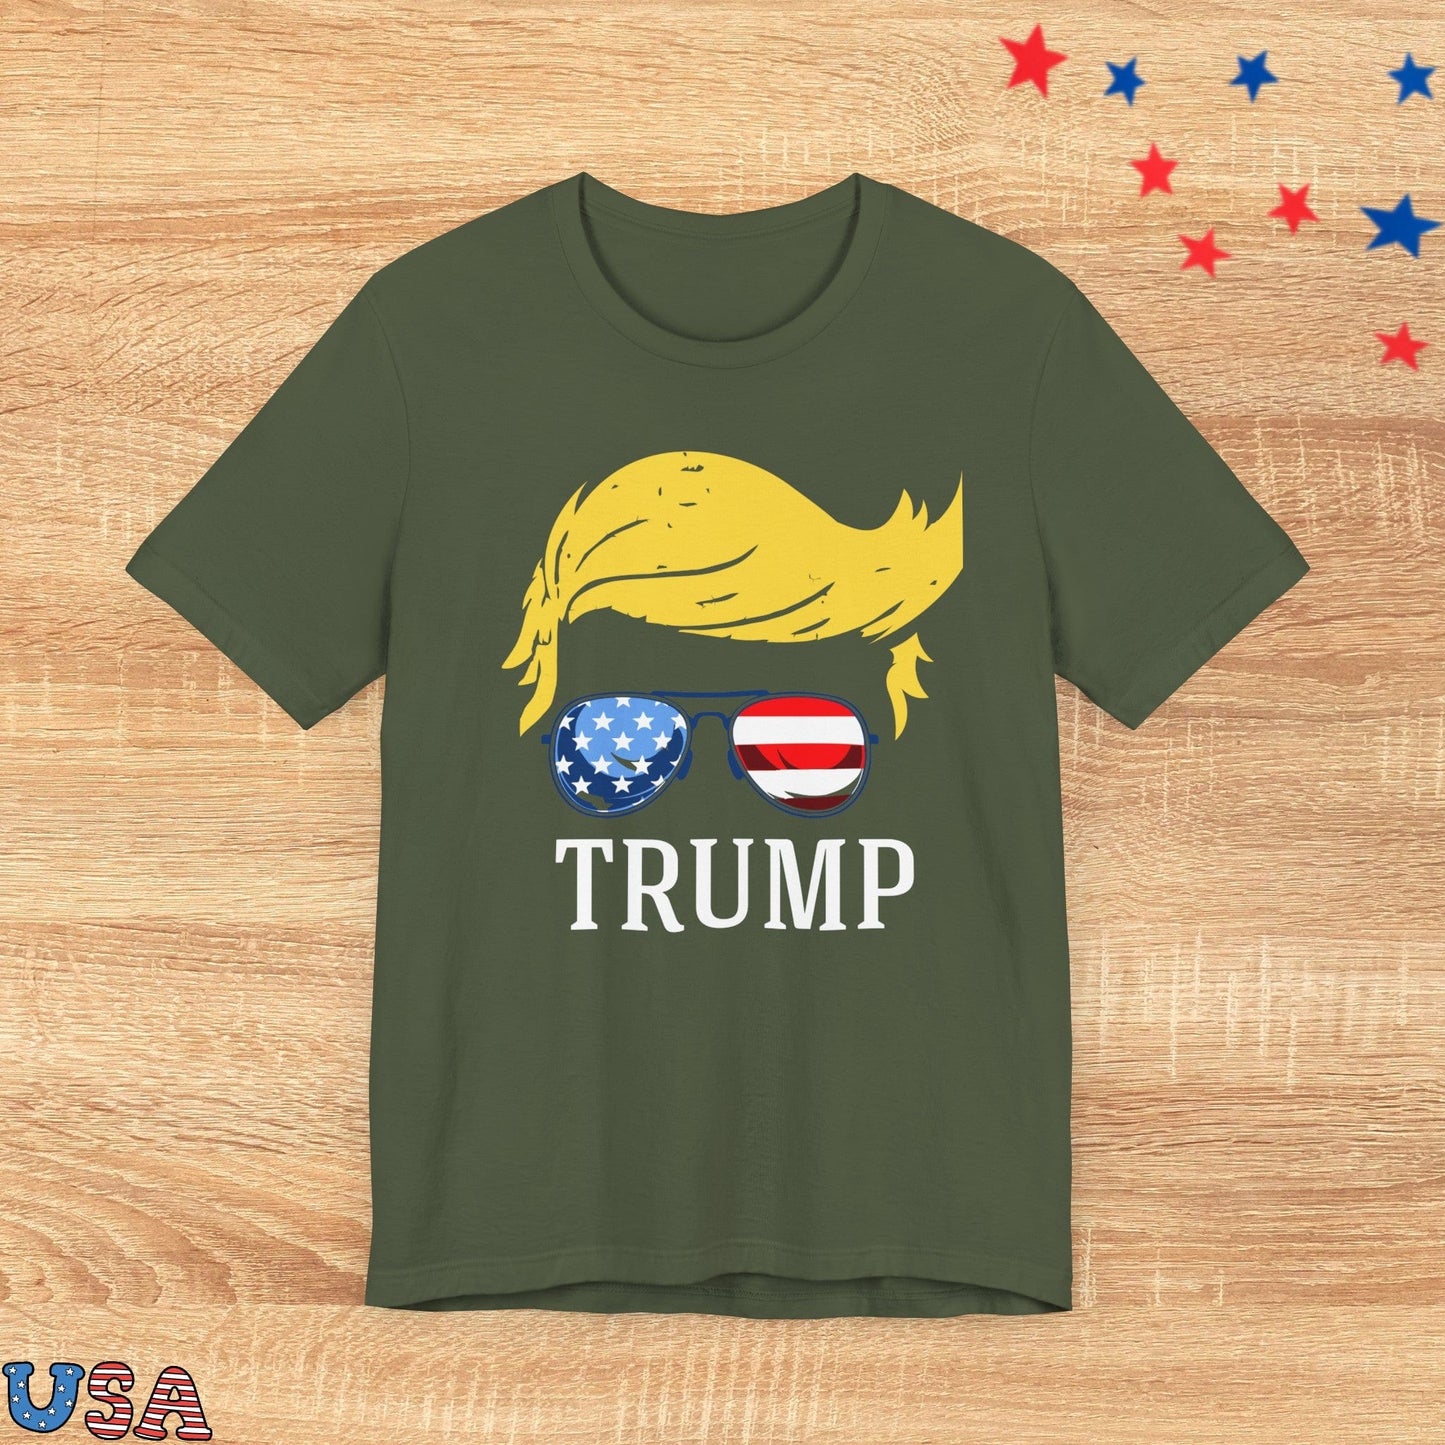 patriotic stars T-Shirt Military Green / XS Trump With USA Flag glasses